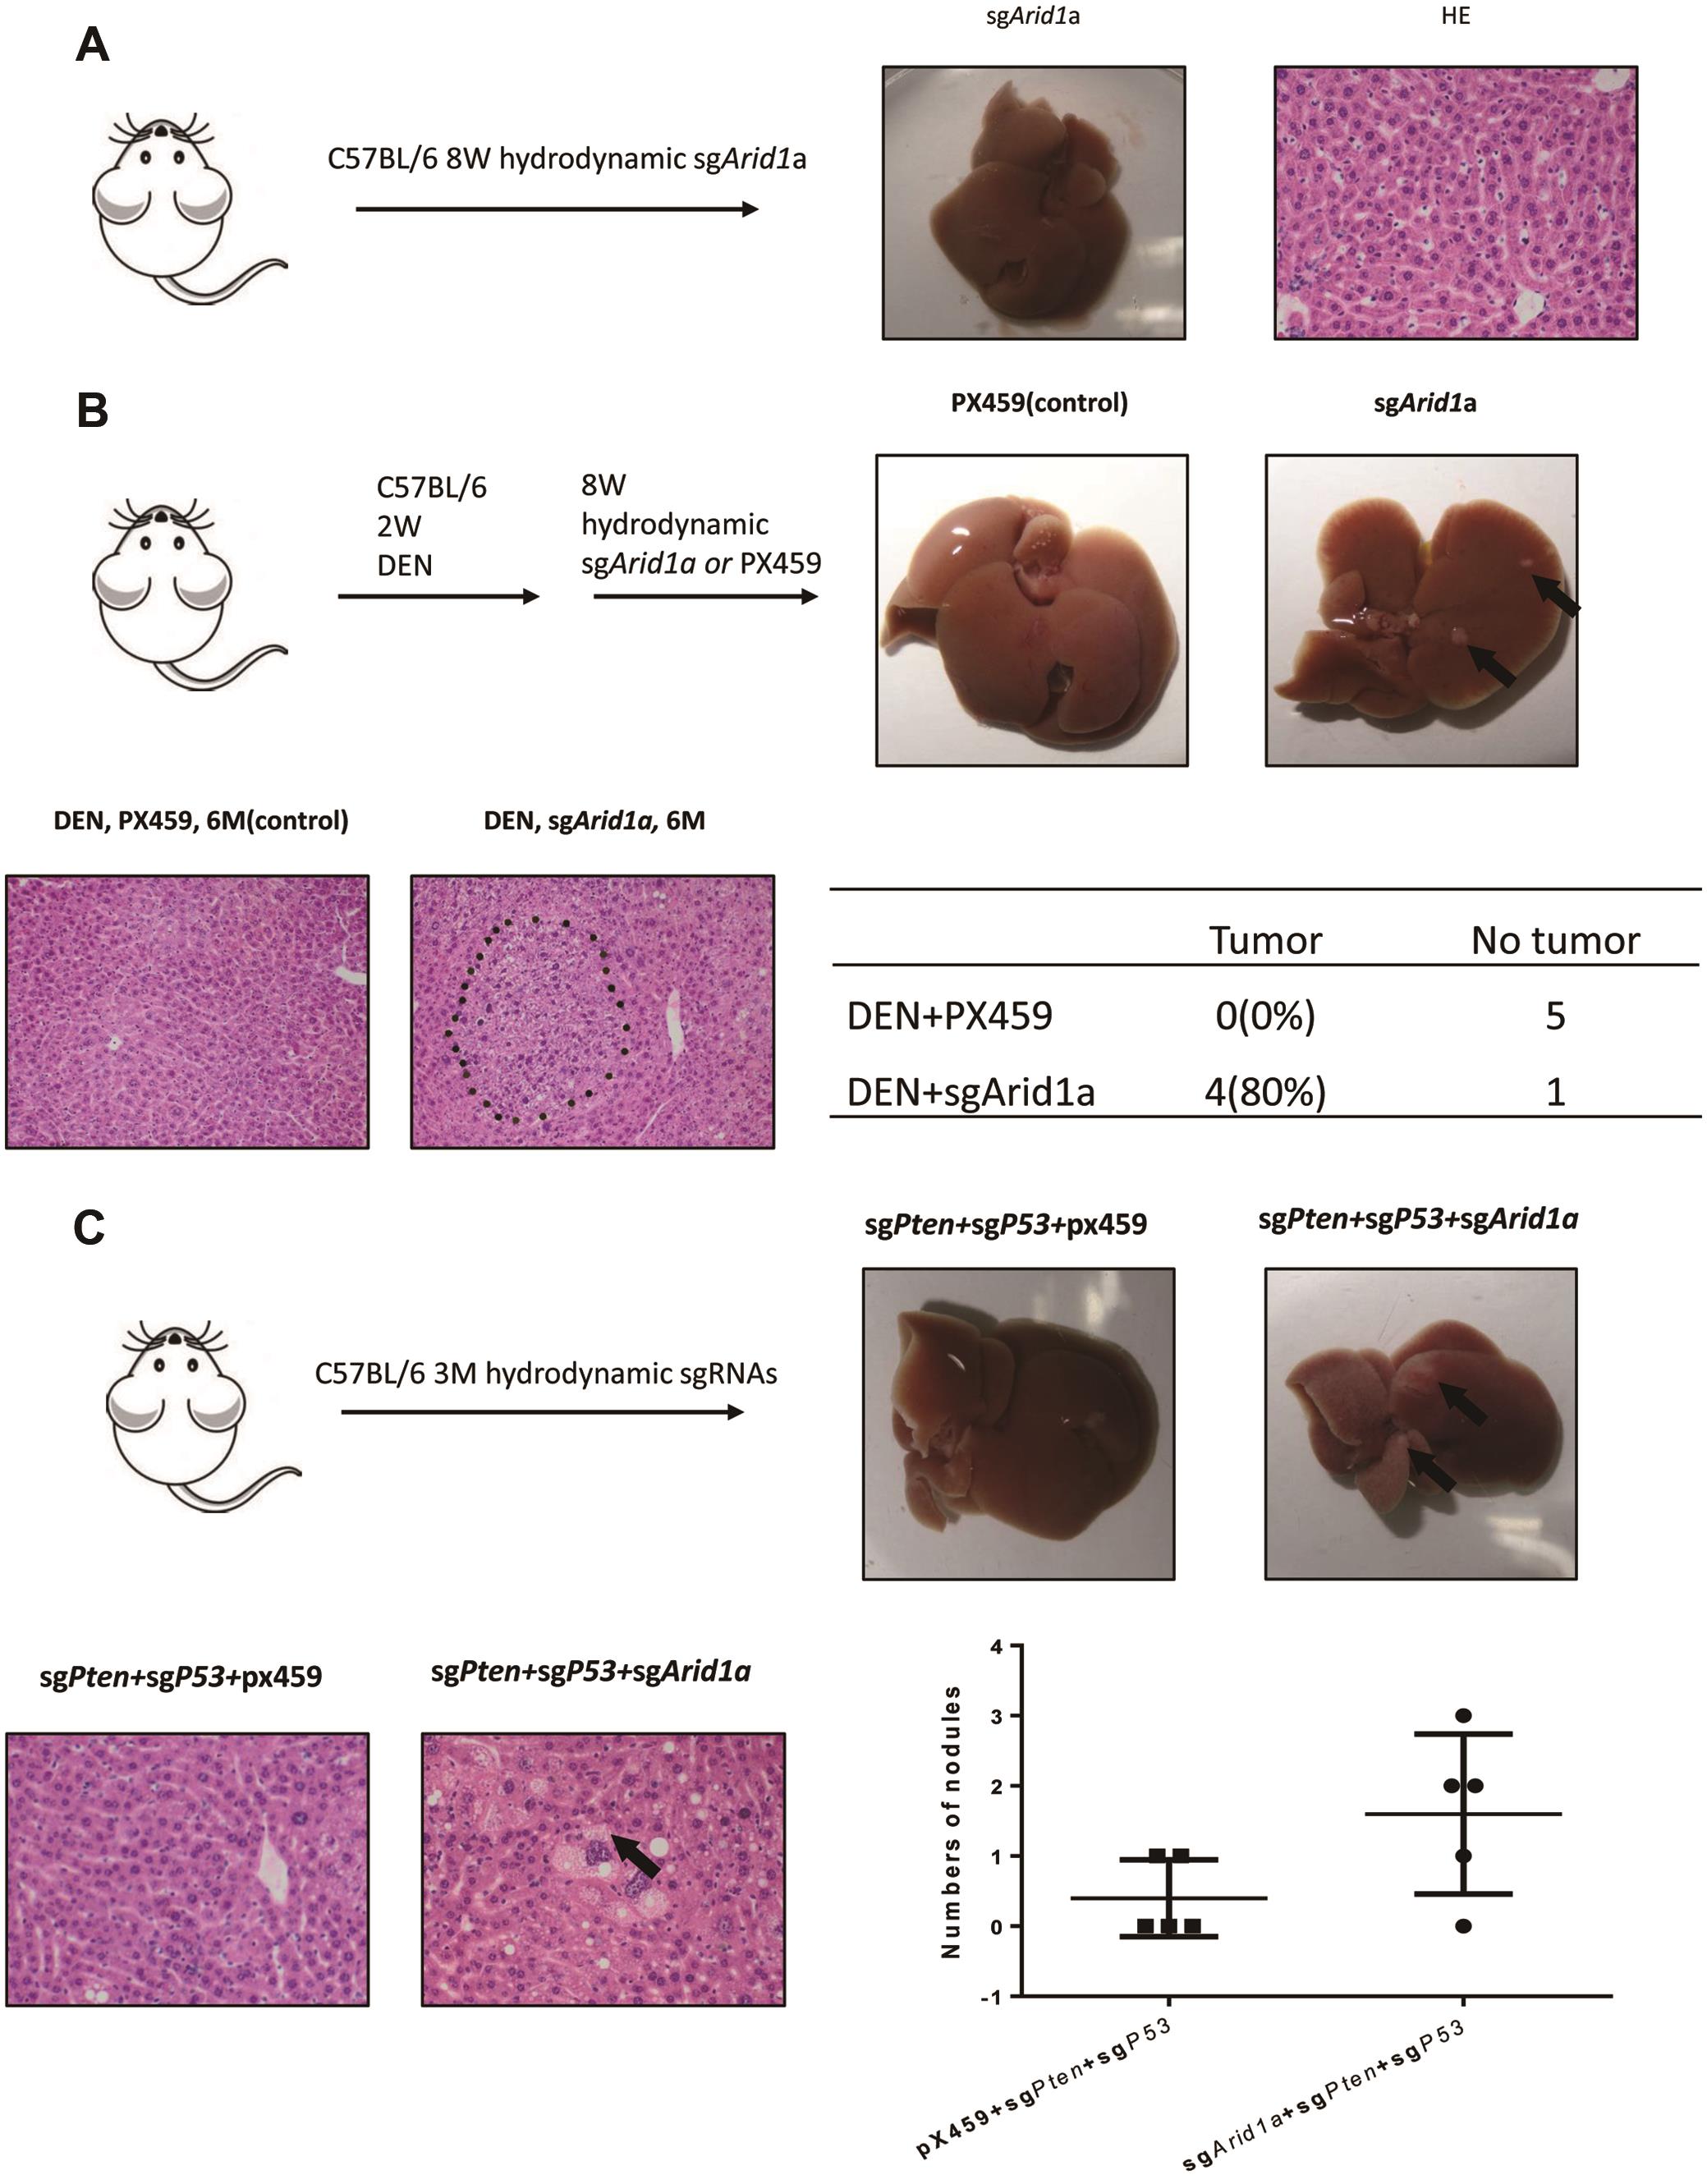 ARID1A deficiency accelerates liver tumorigenesis in mice.